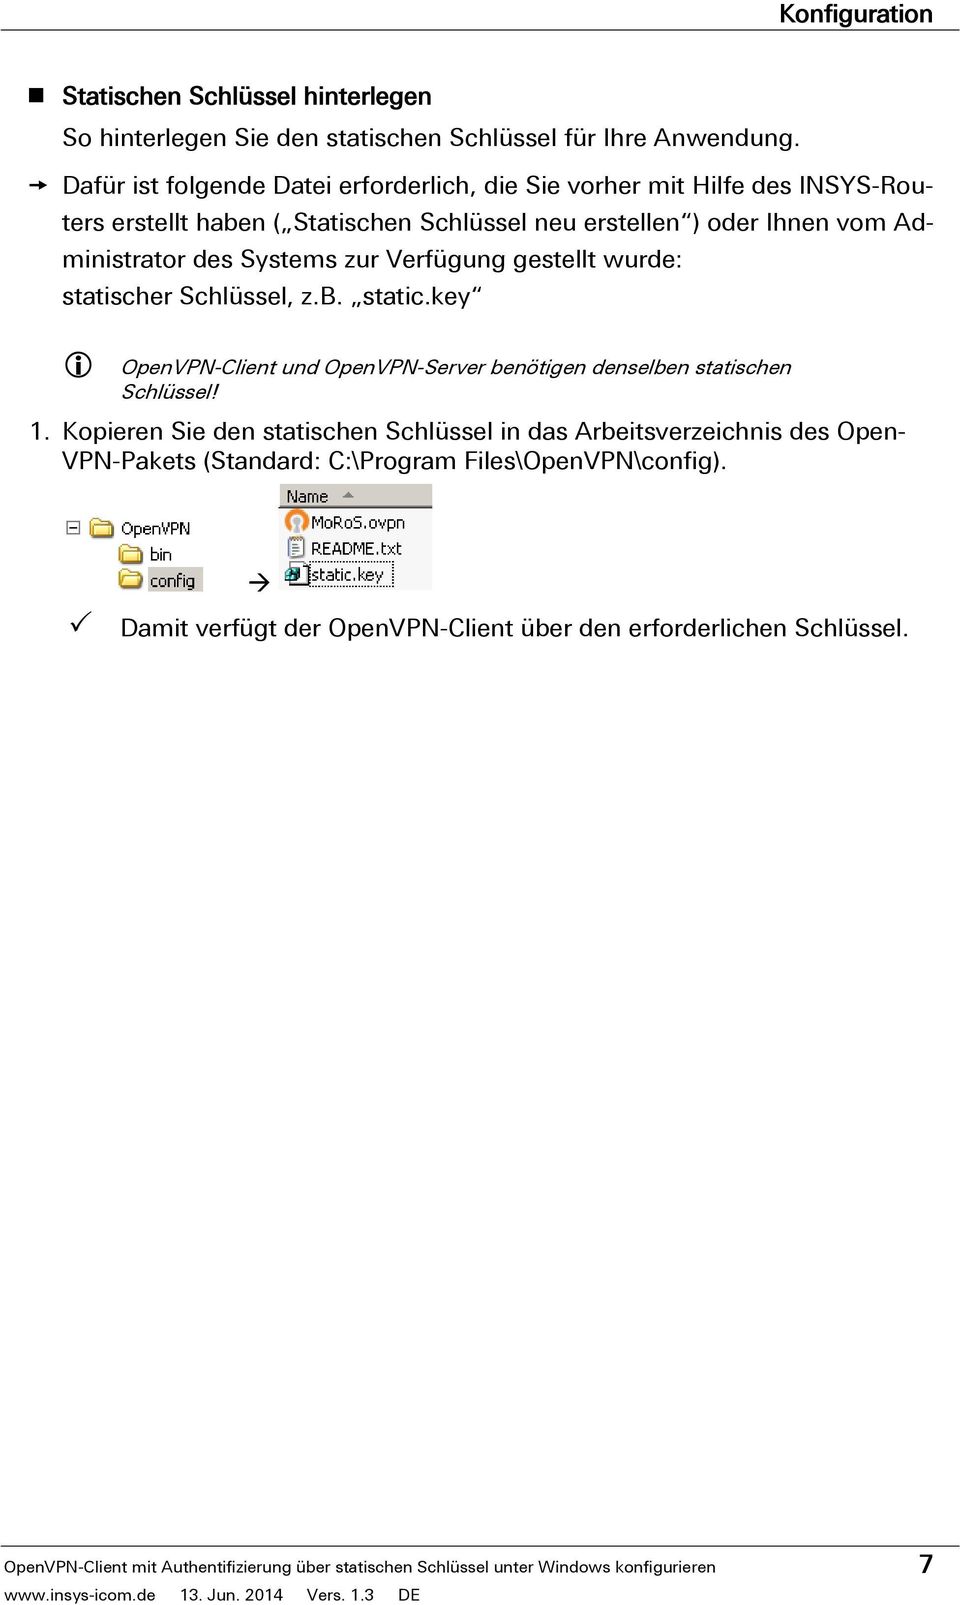 doc @ 28684 @ Pos: 12 /Datenkommunikation/Configuration Guide/OpenVPN/OpenVPN-Server unter Windows installieren/3 Konfiguration - OpenVPN-Server unter Windows installieren/3-10 TÄ Konfiguration @